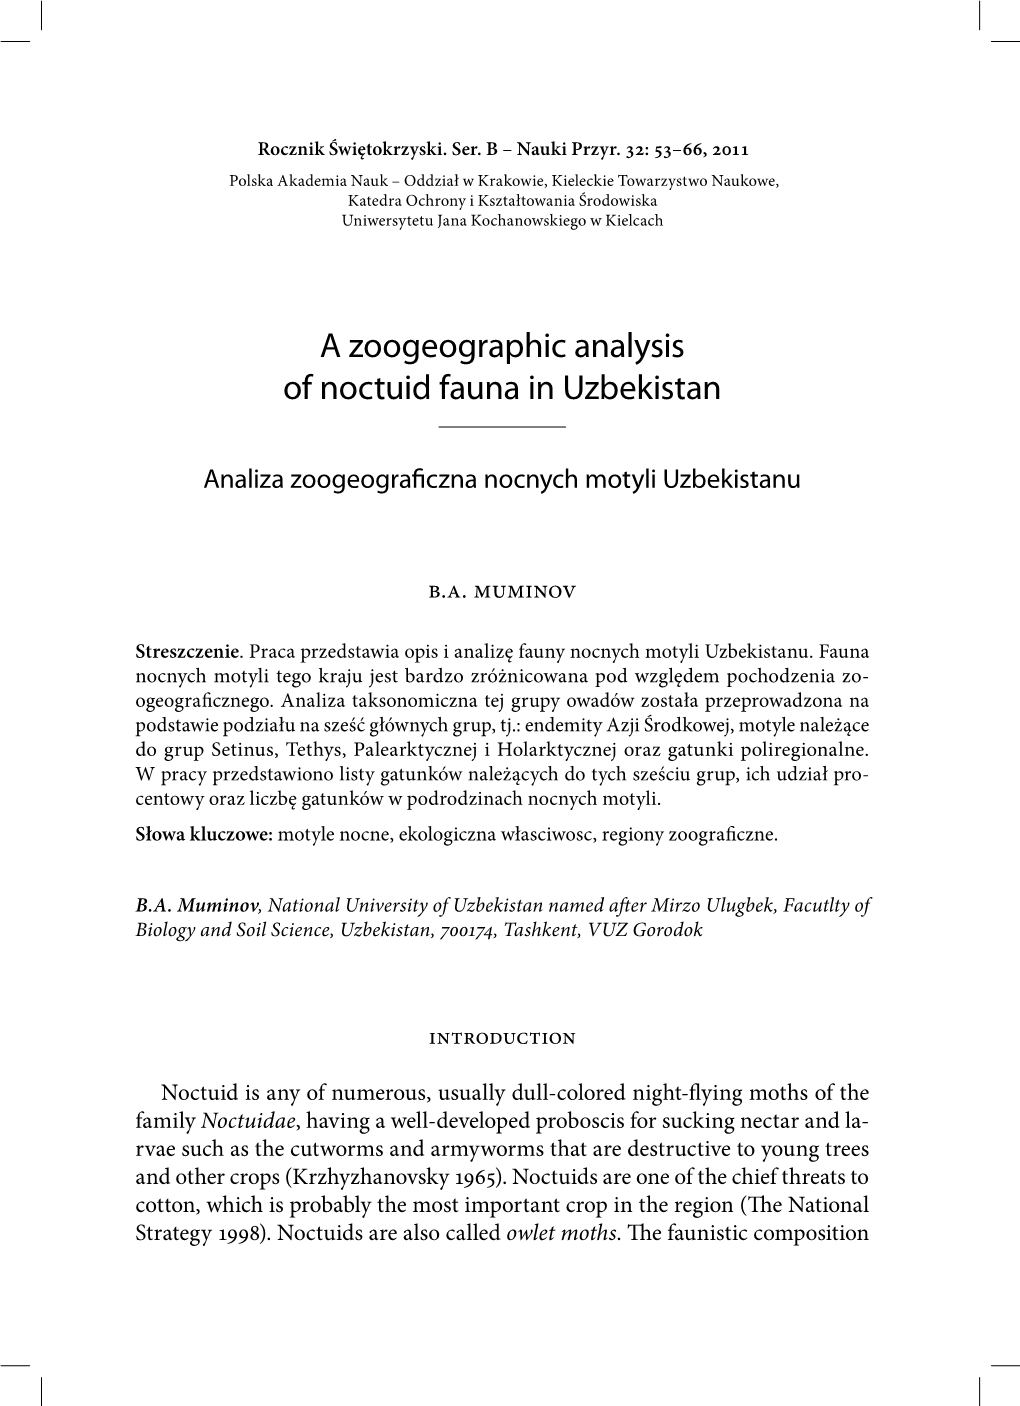 A Zoogeographic Analysis of Noctuid Fauna in Uzbekistan